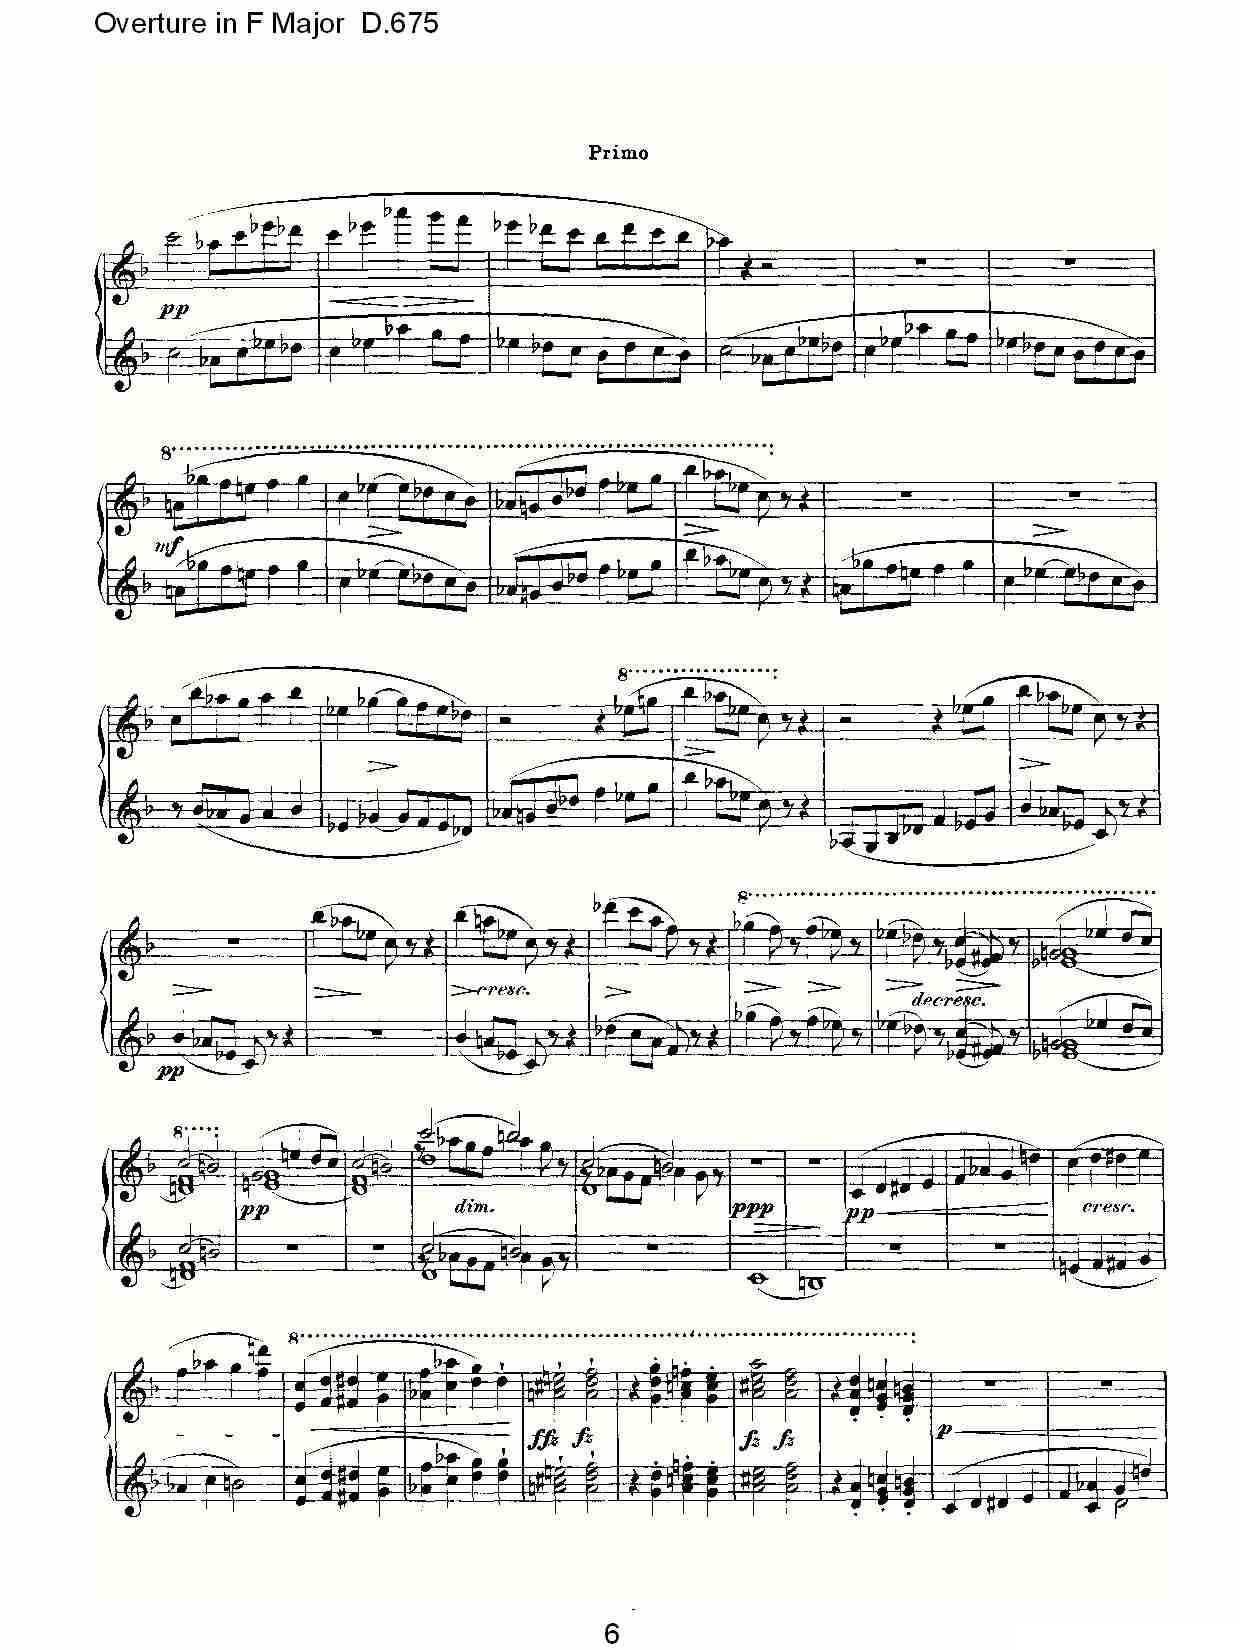 Overture in F Major D.675（Ｆ大调序曲 D.675）钢琴曲谱（图6）